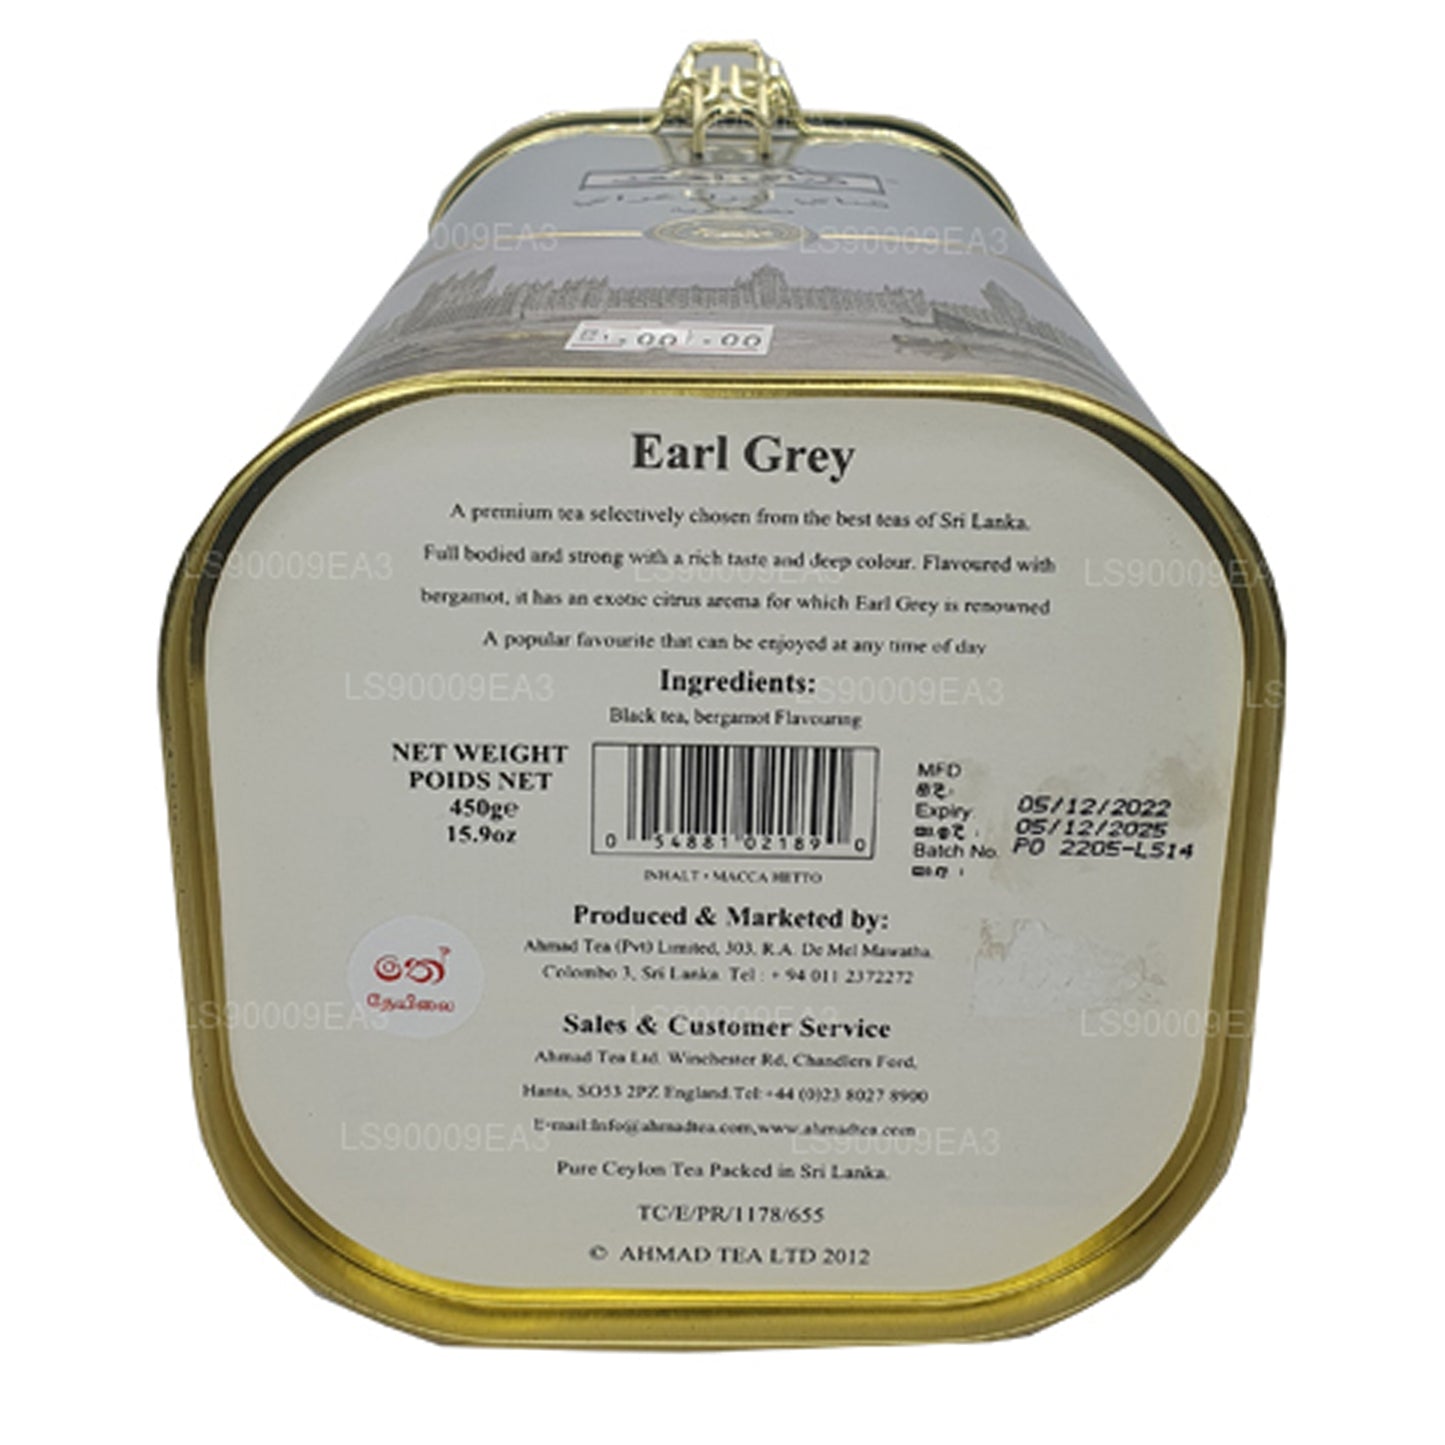 Ahamad Earl Grey  Black Tea With Bergamot Flavour (450g)